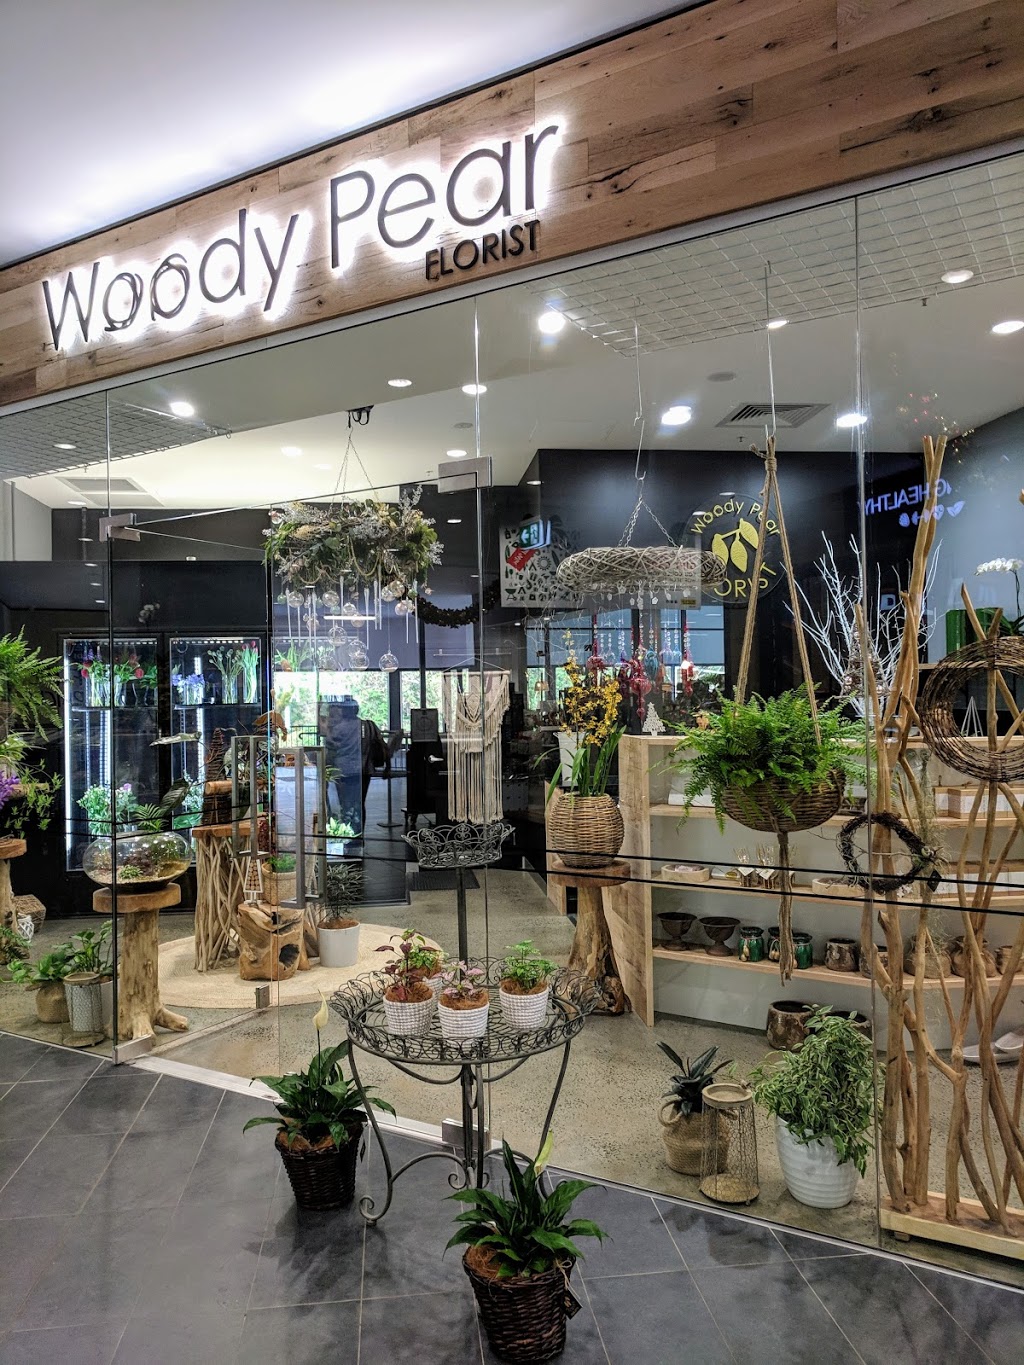 The Woody Pear | florist | 1000 Waterworks Rd, The Gap QLD 4060, Australia | 0733000777 OR +61 7 3300 0777